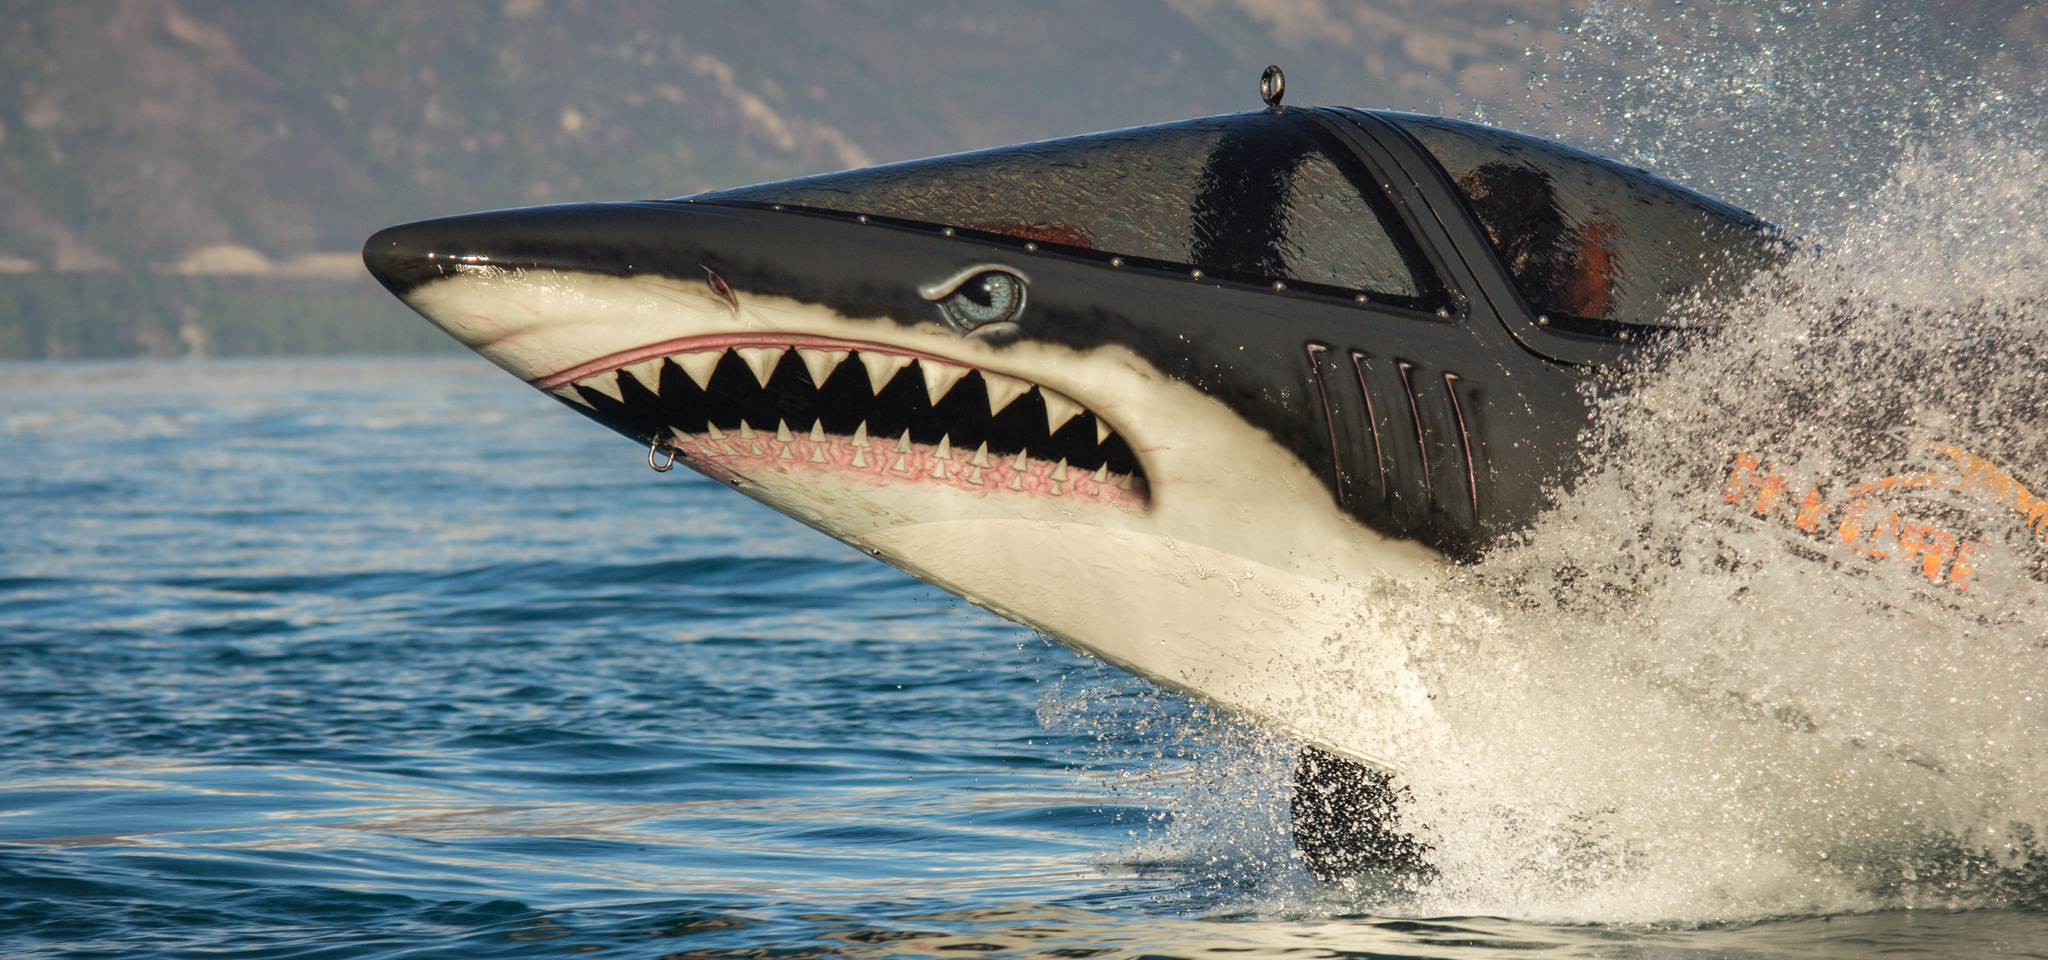 Hydro Attack Individual Shark Ride